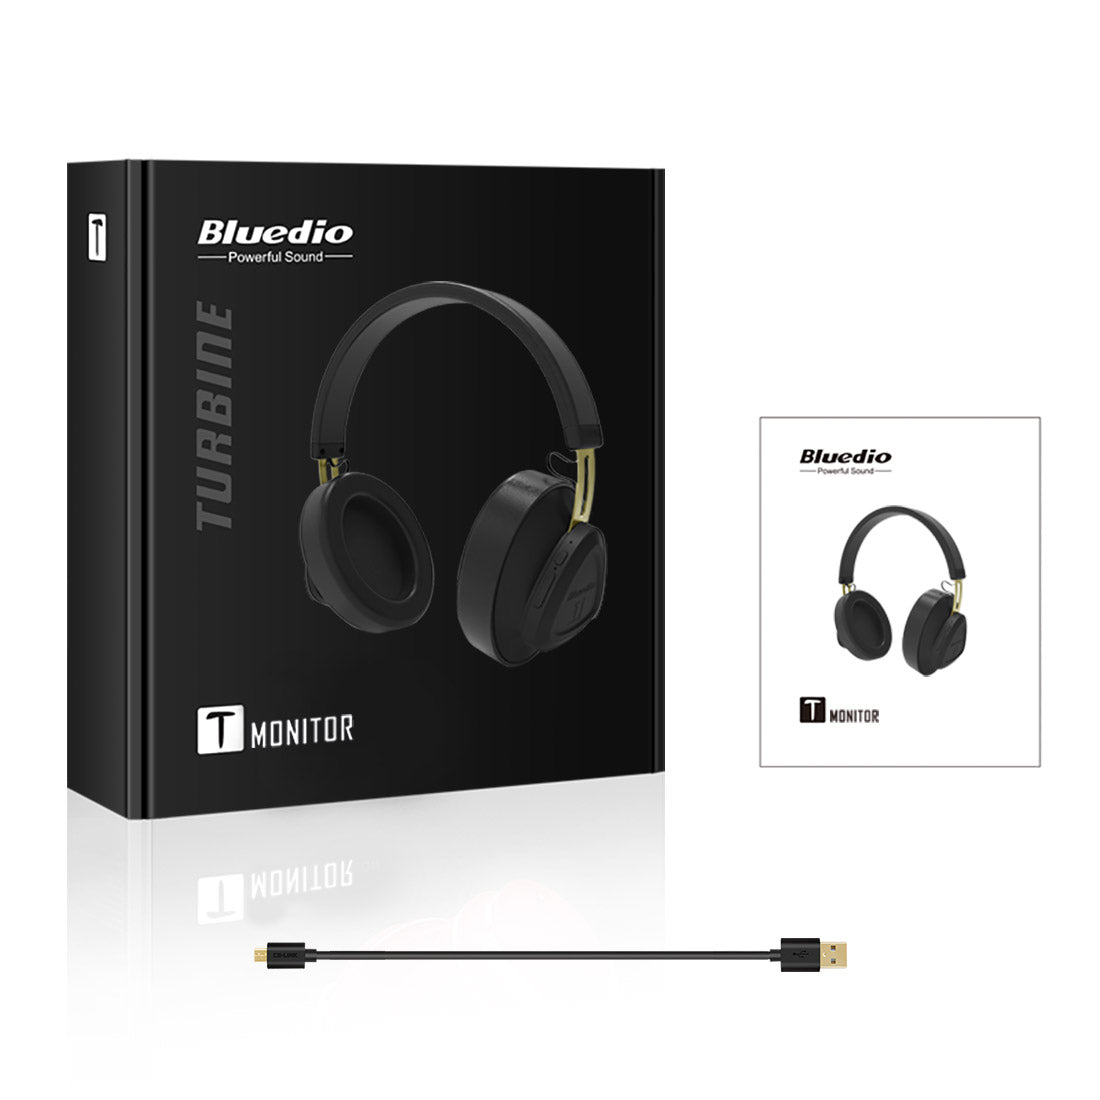 Bluedio Bluetooth Headset Tmonitor Wireless Bluetooth Headphone